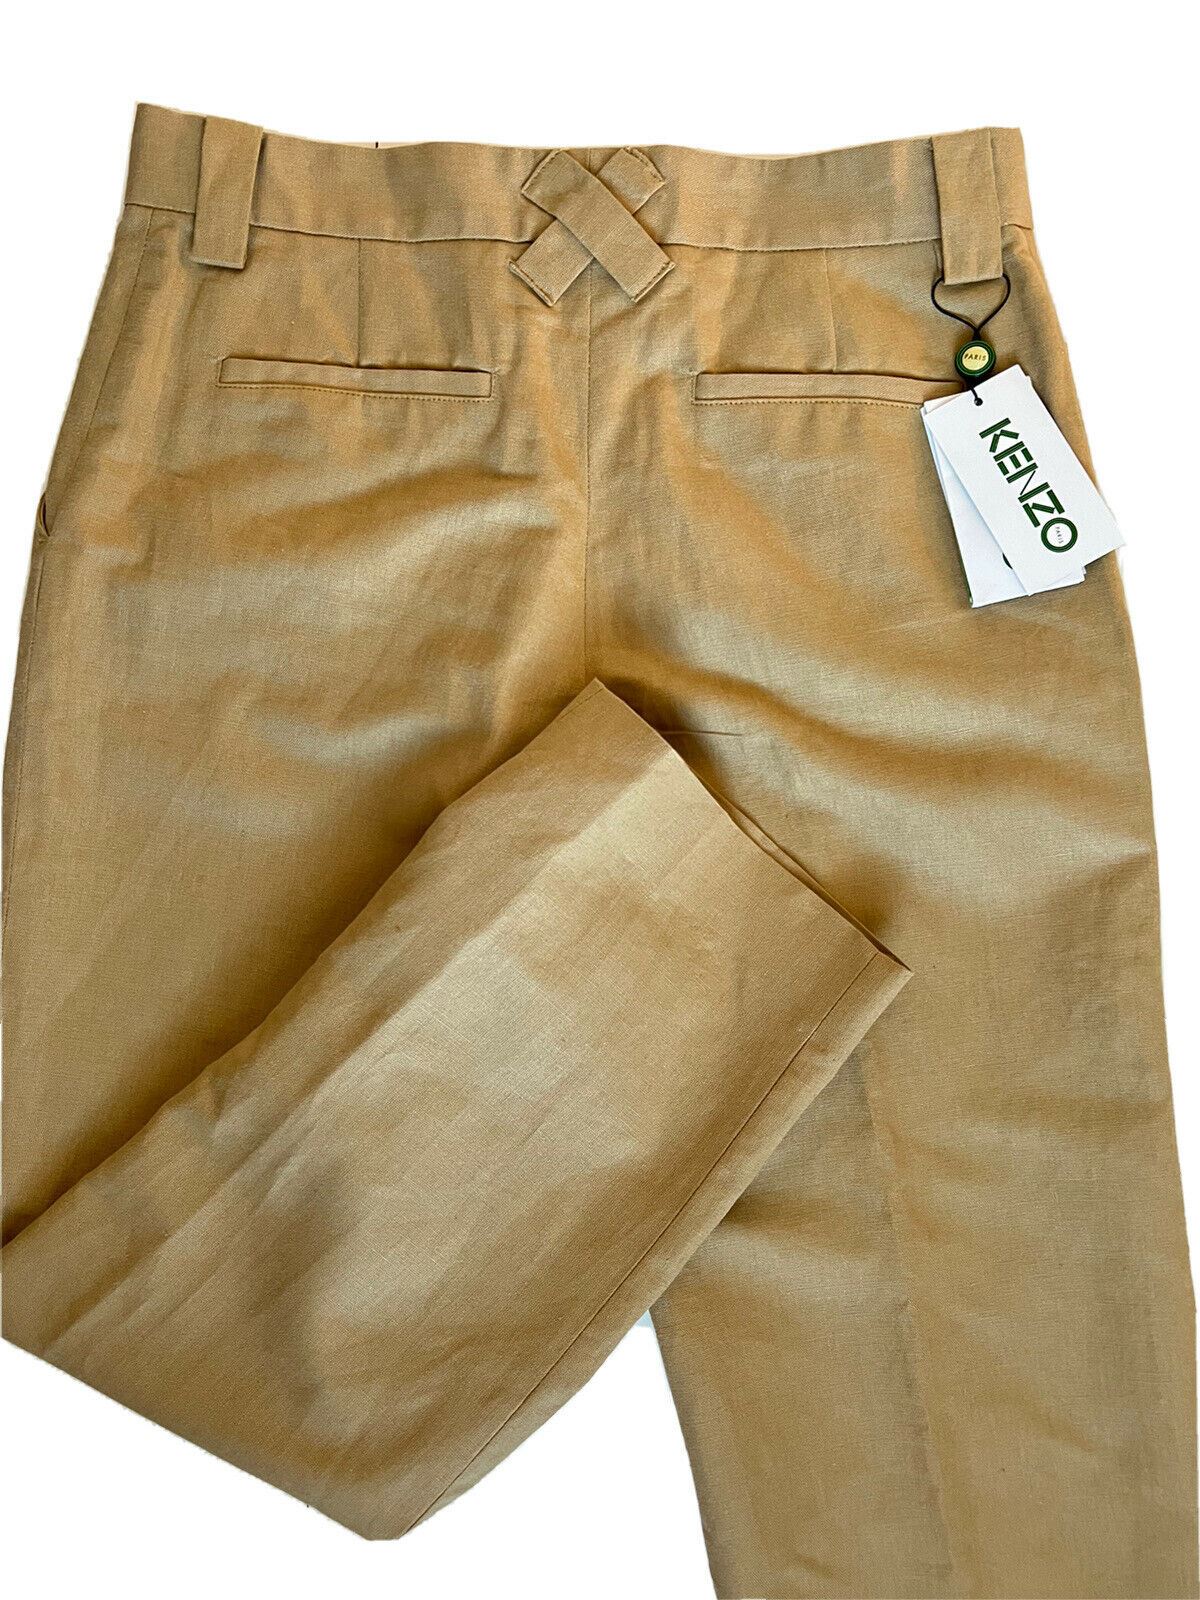 NWT $325 Kenzo Men's Dark Beige Casual Linen Pants Size 38 US (54 Euro)